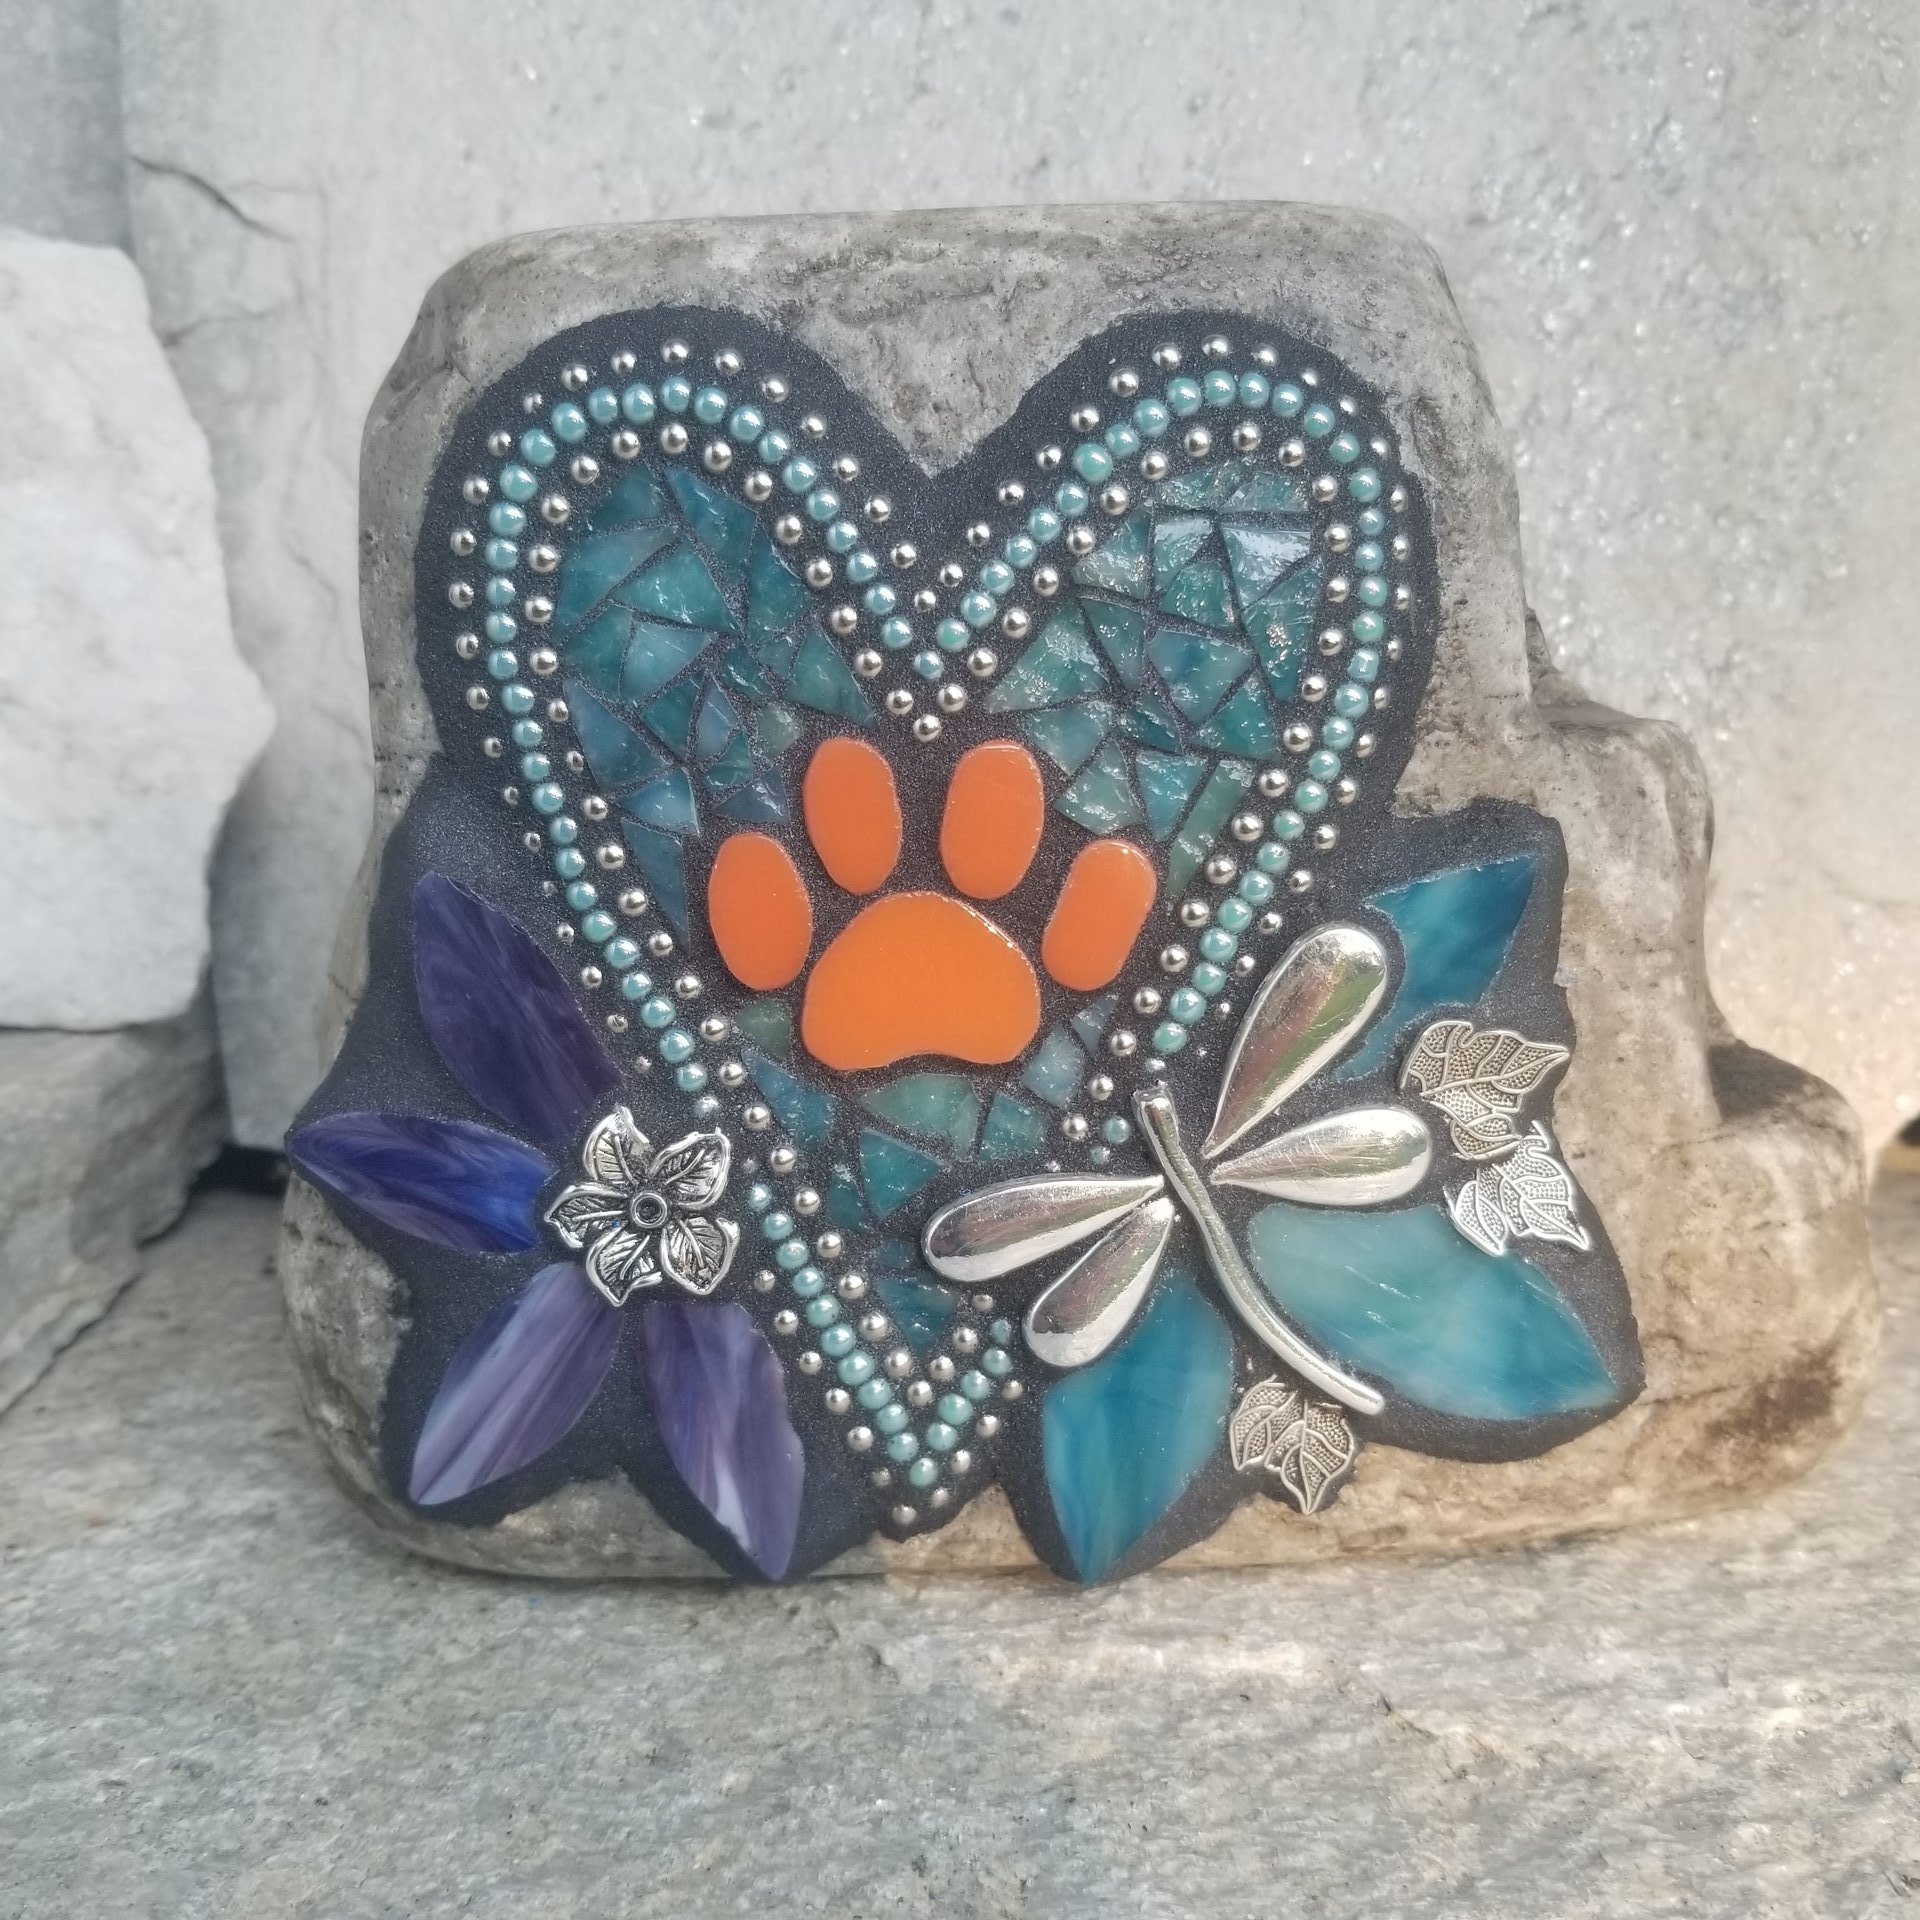 Mosaic Pet Memorial Heart with Paw Flowers Dragonfly Garden Stone, Garden Decor